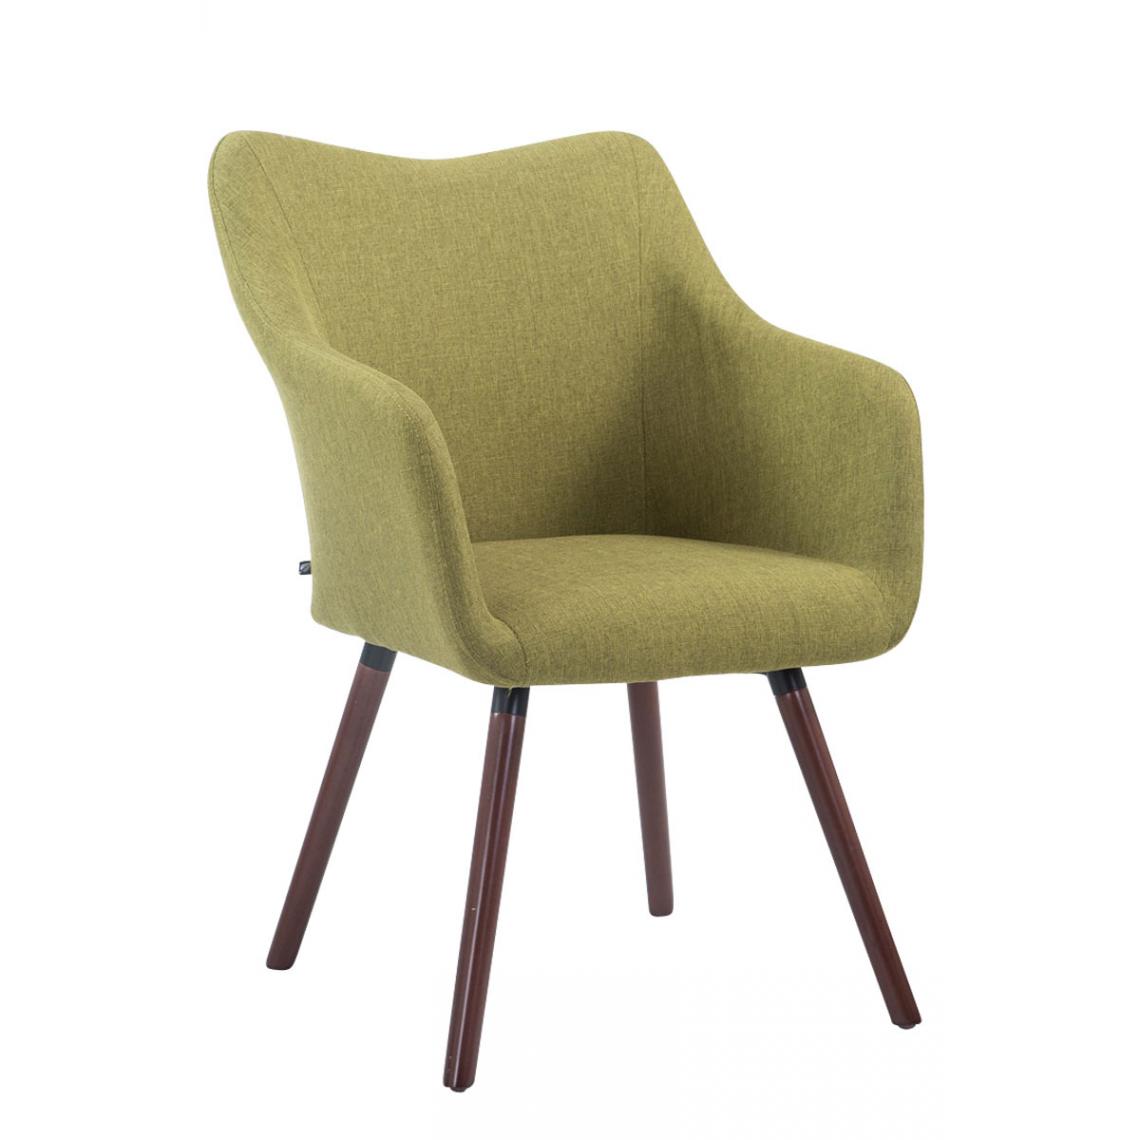 Icaverne - Moderne Chaise visiteur gamme Bamako V2 tissu noyer (chêne) couleur vert - Chaises